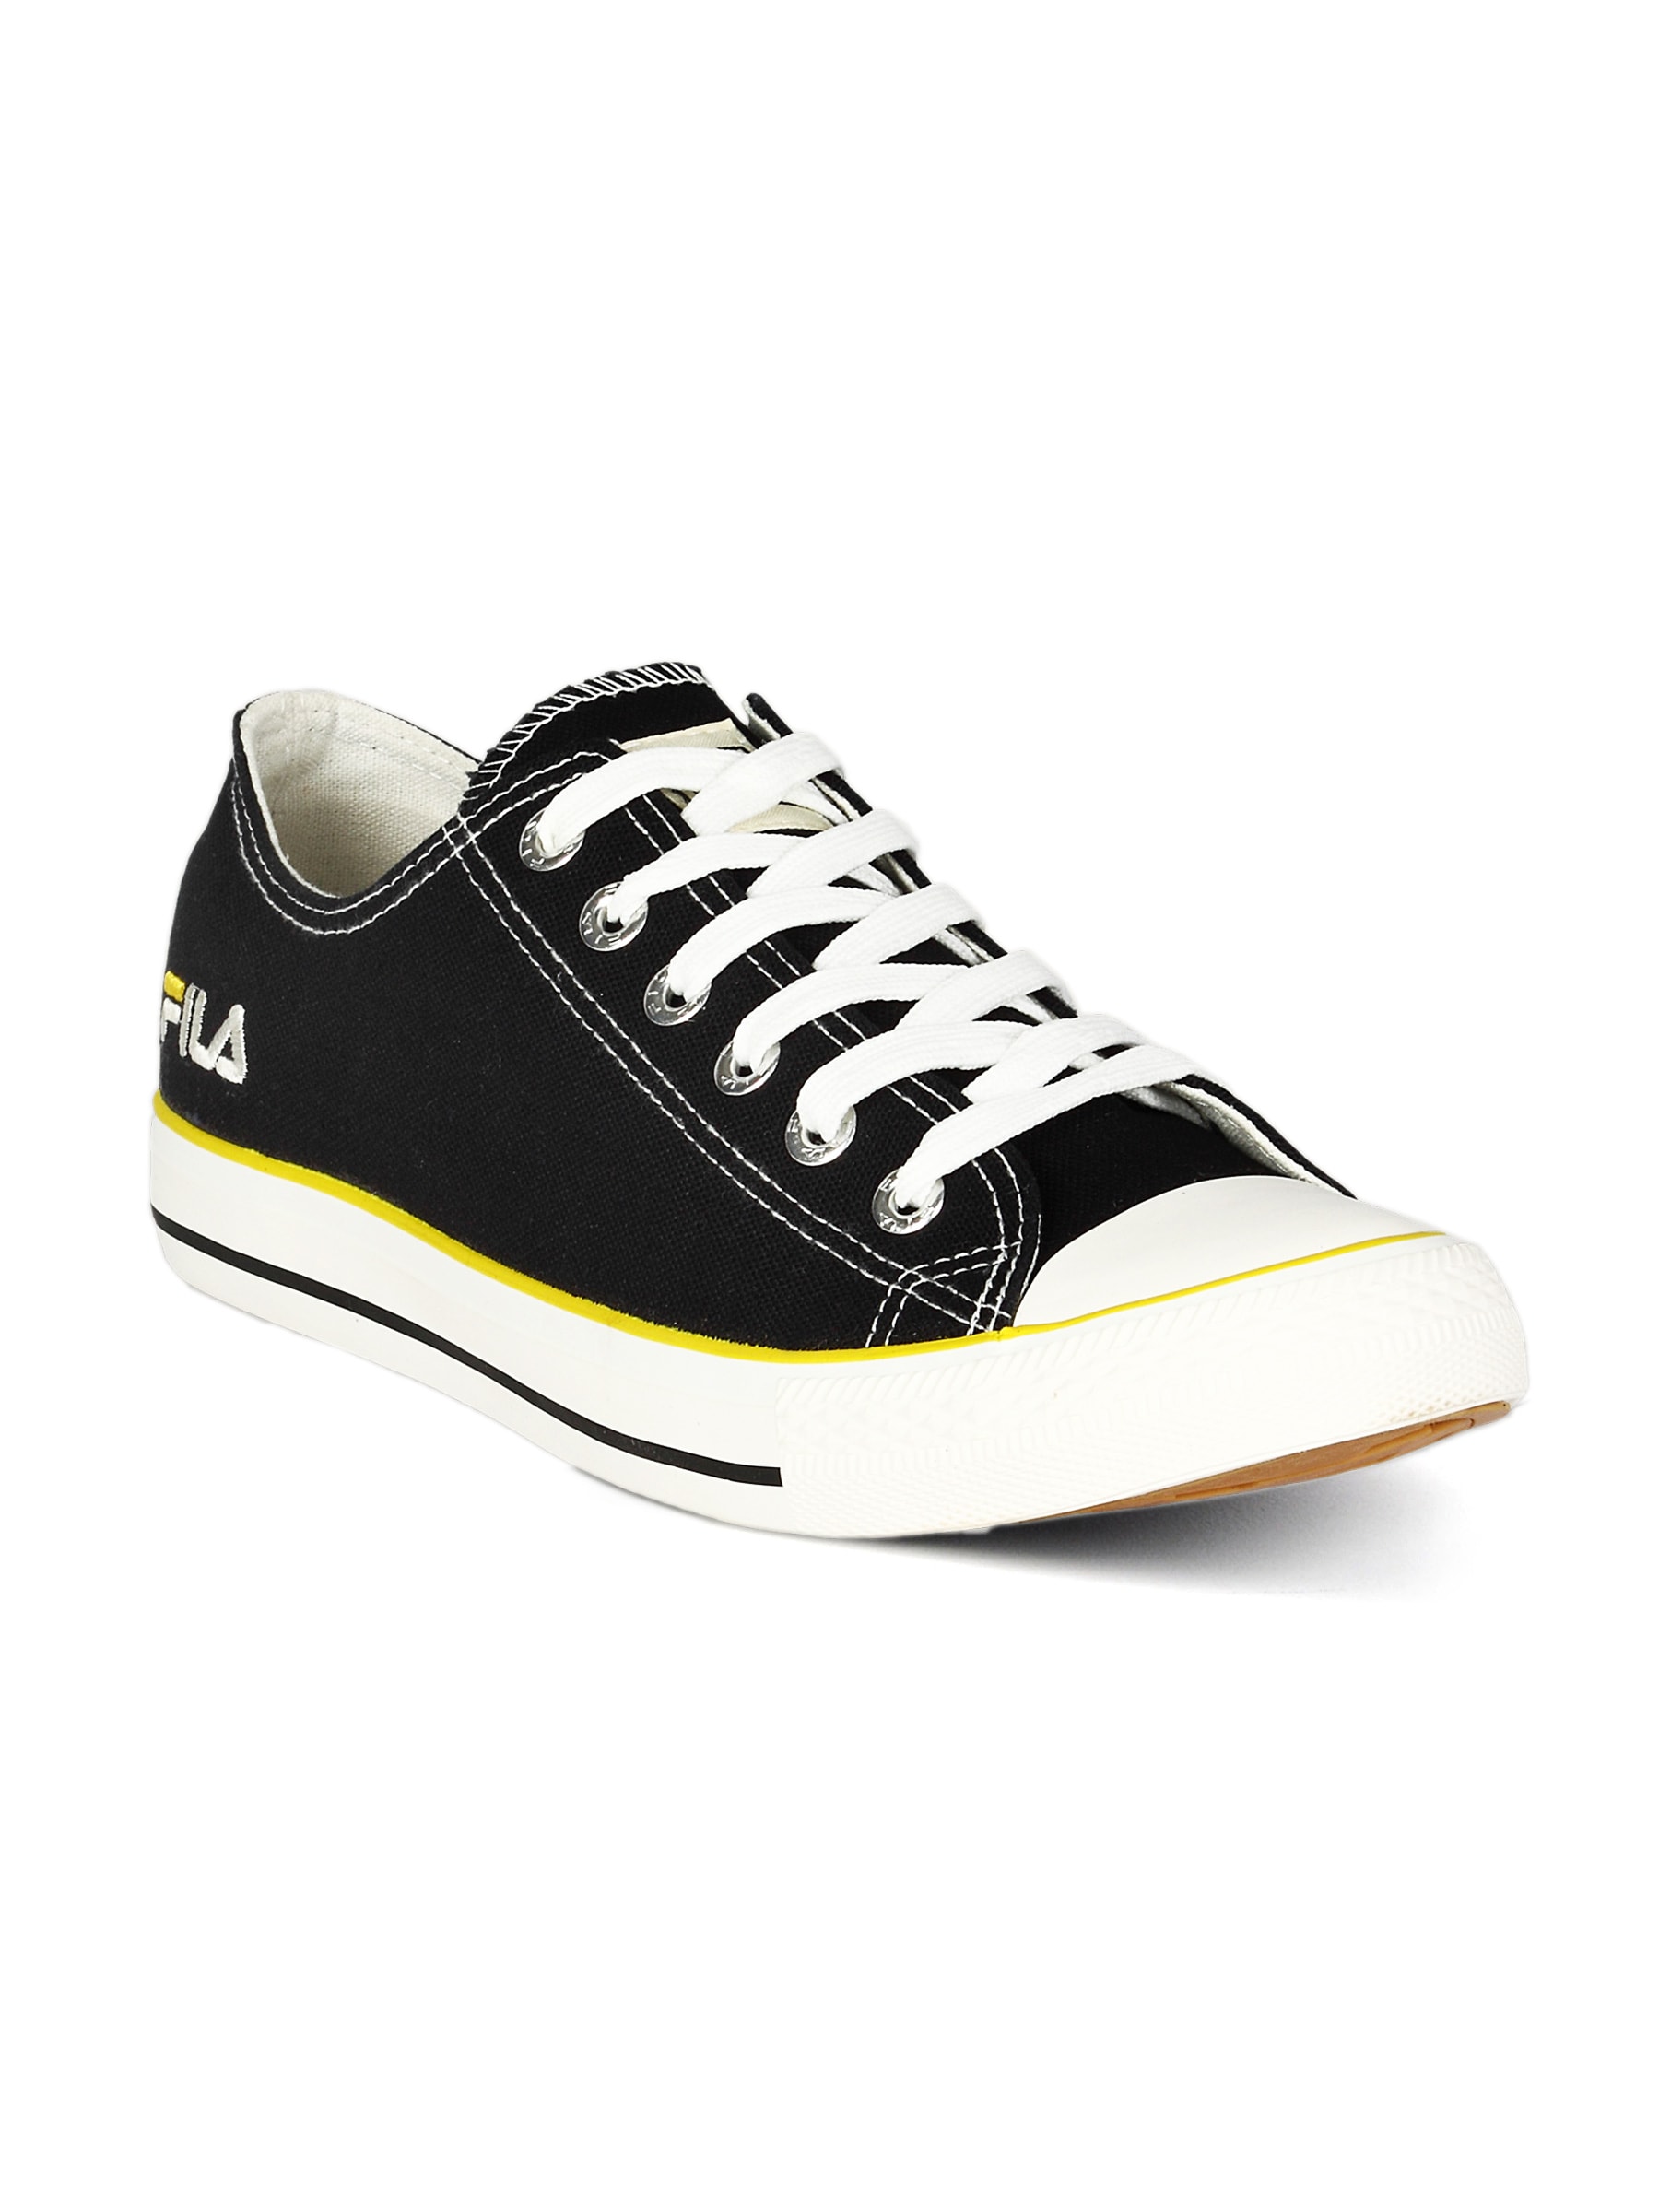 Fila Men's Basic Low Black Shoe